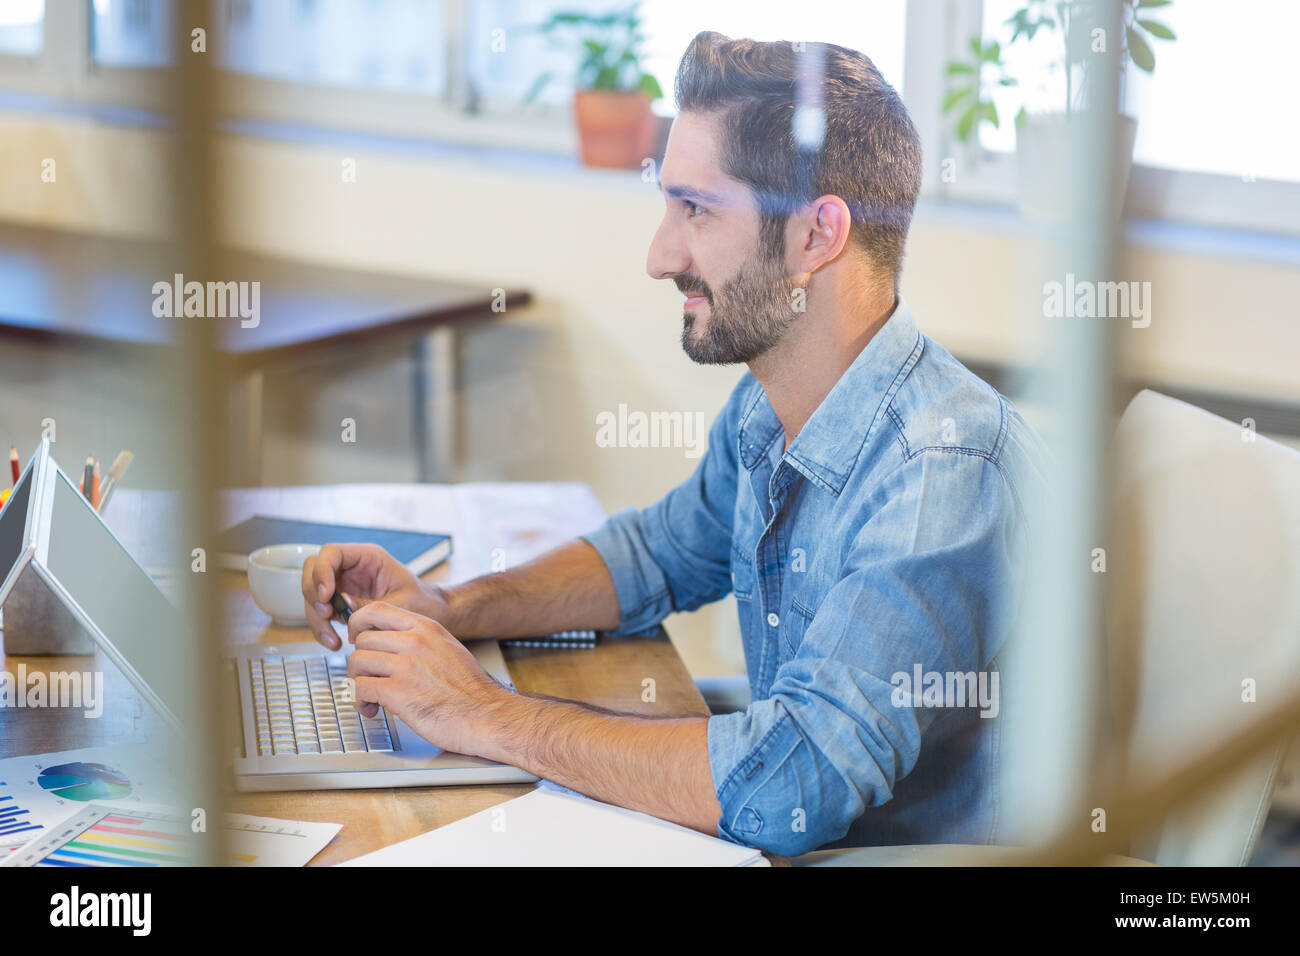 Smiling businessman working on laptop Stock Photo